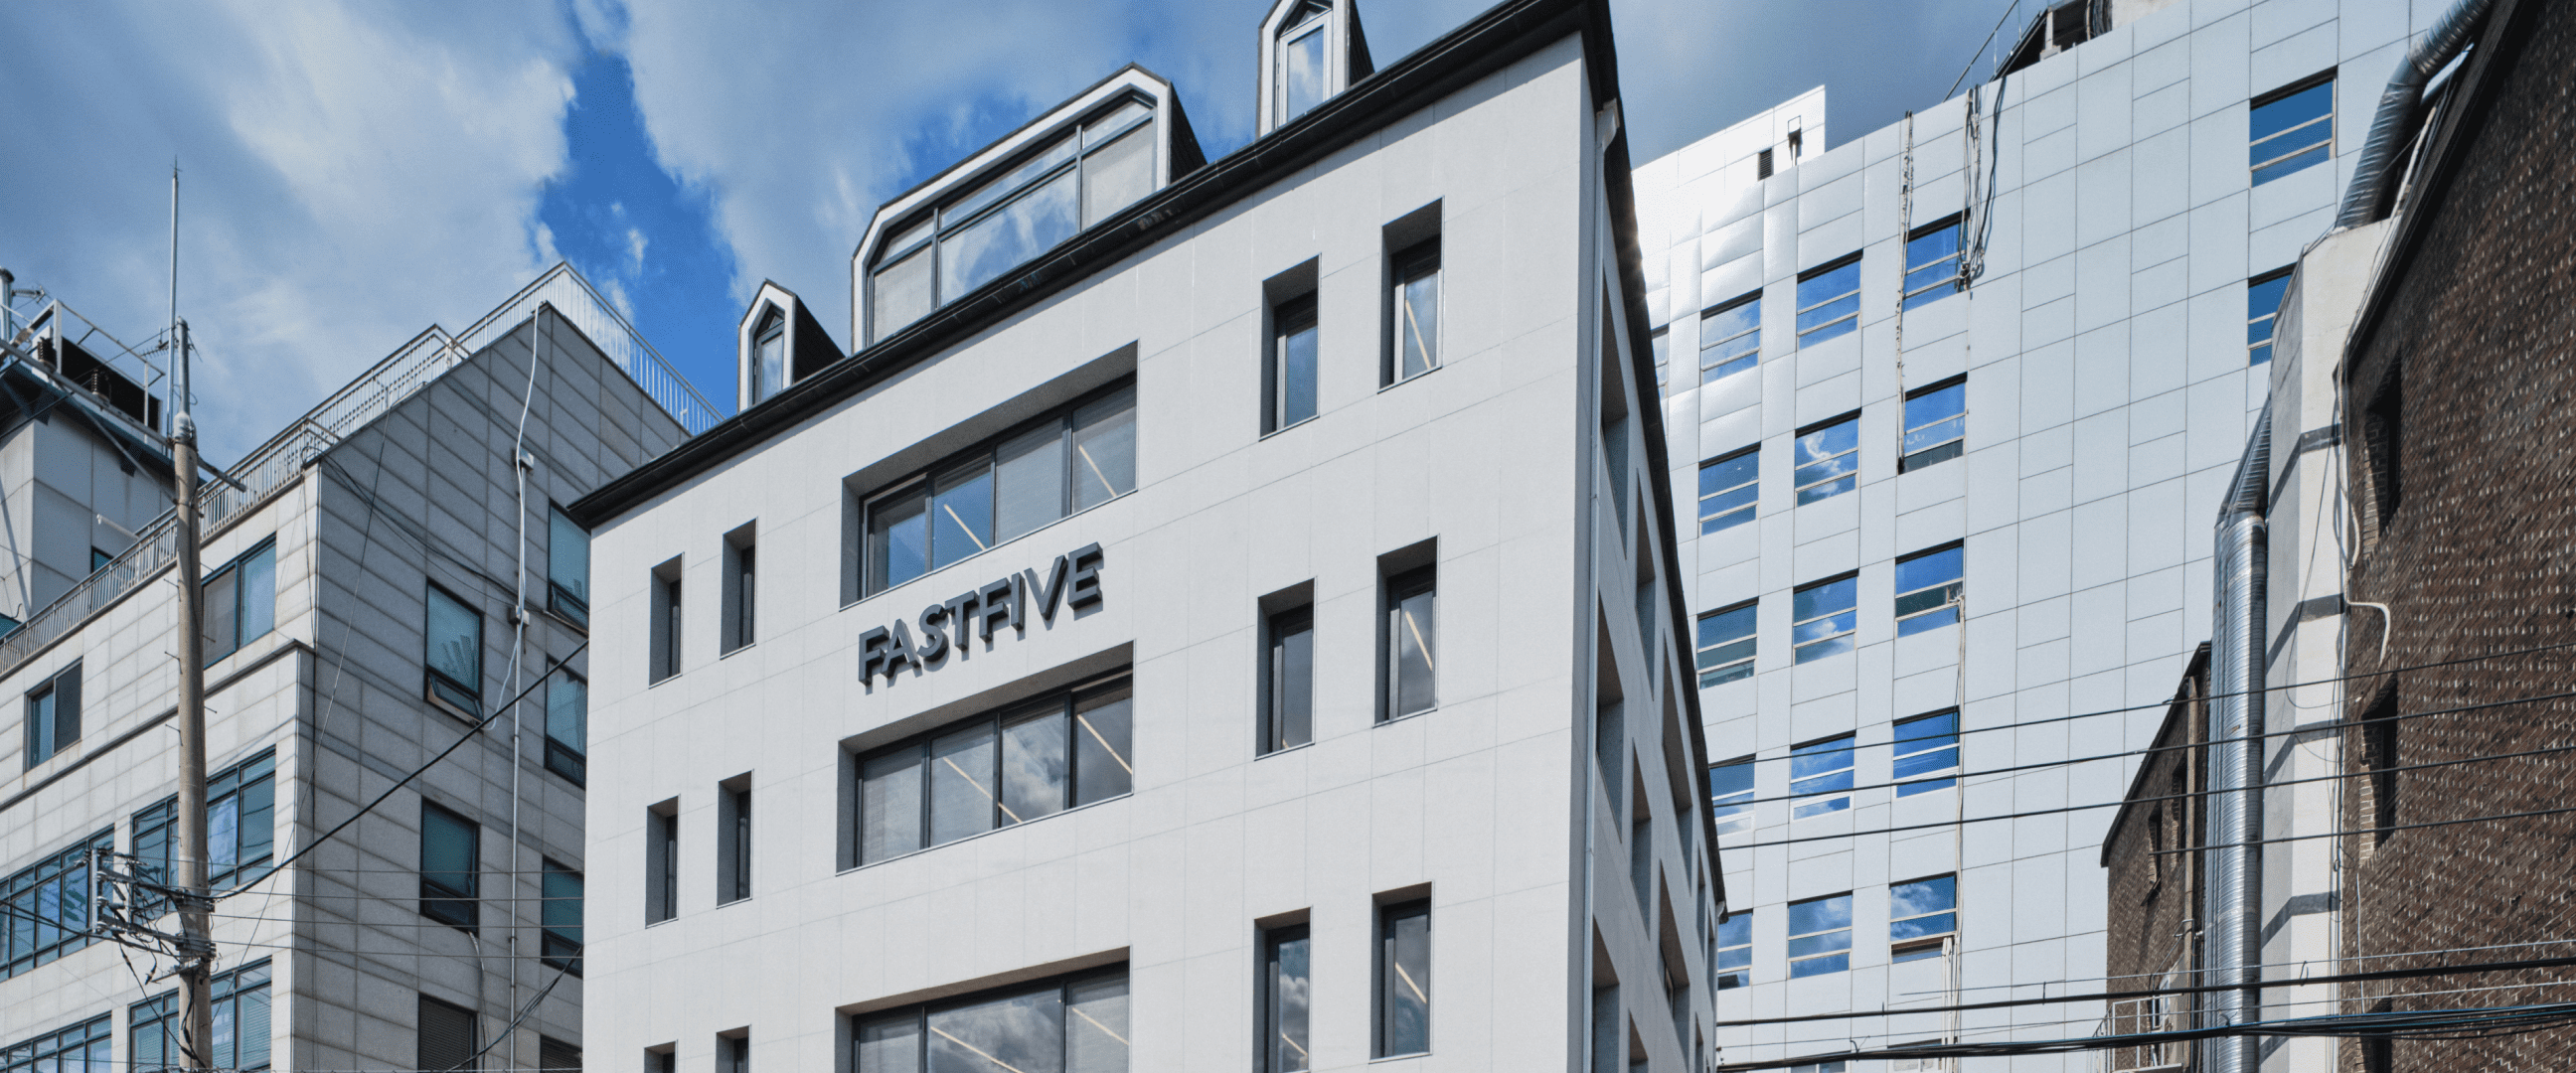 fastfive 빌딩